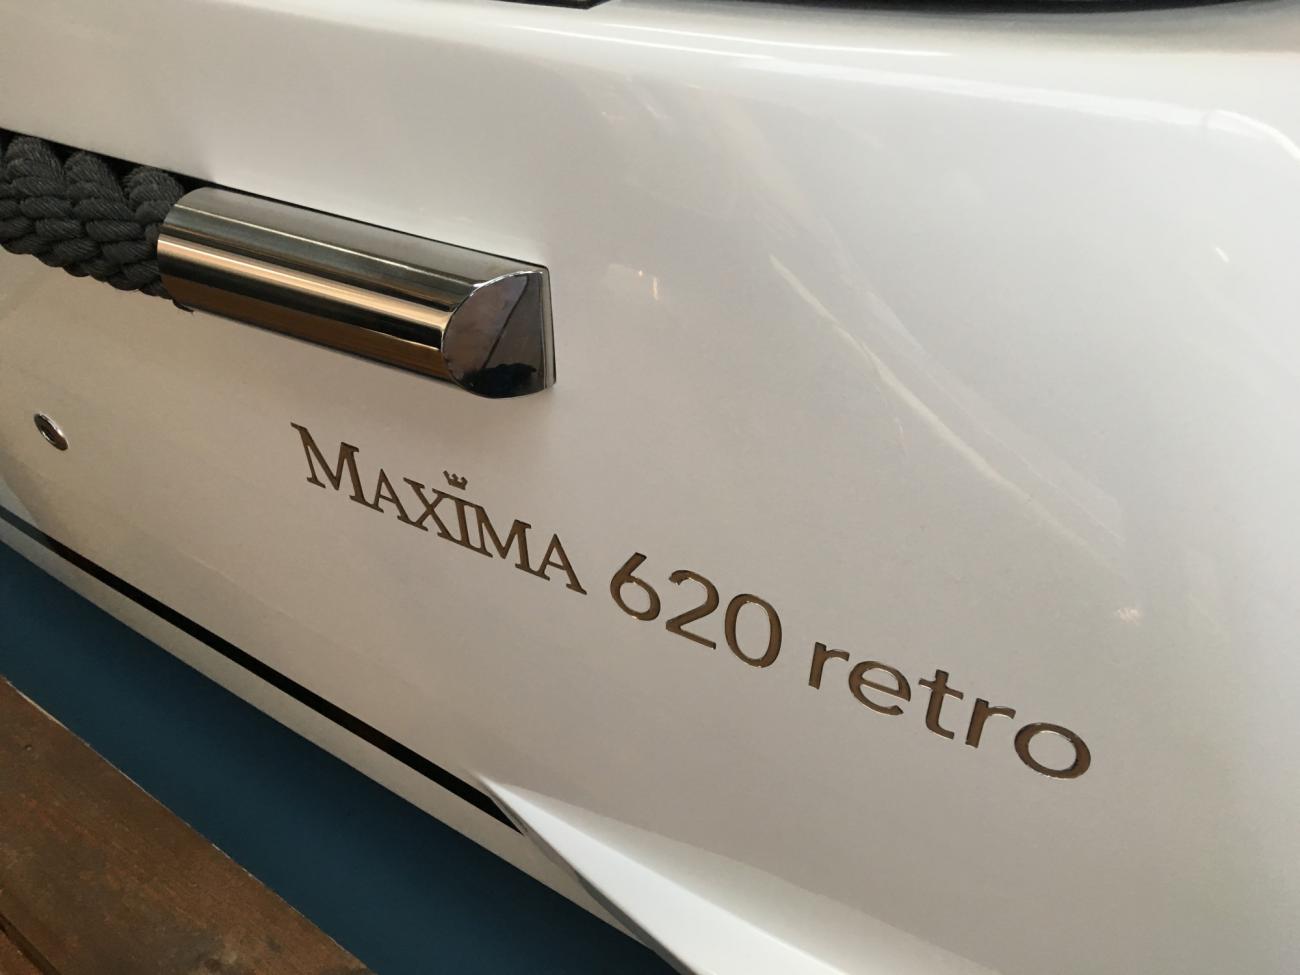 Maxima 620 Retro Elektrisch